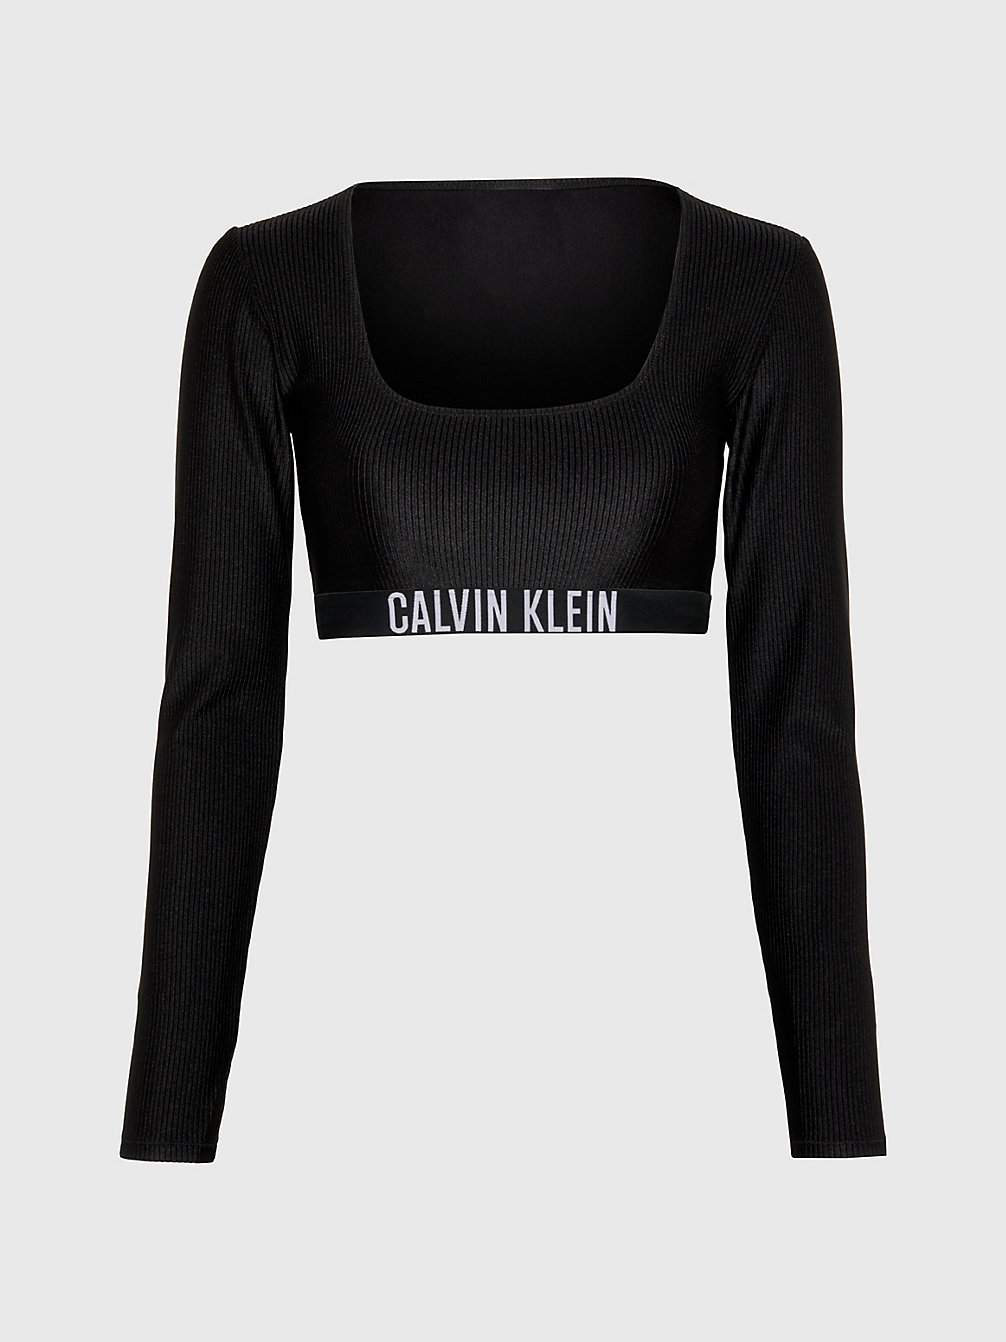 PVH BLACK Rashguard Bikini-Top undefined Damen Calvin Klein